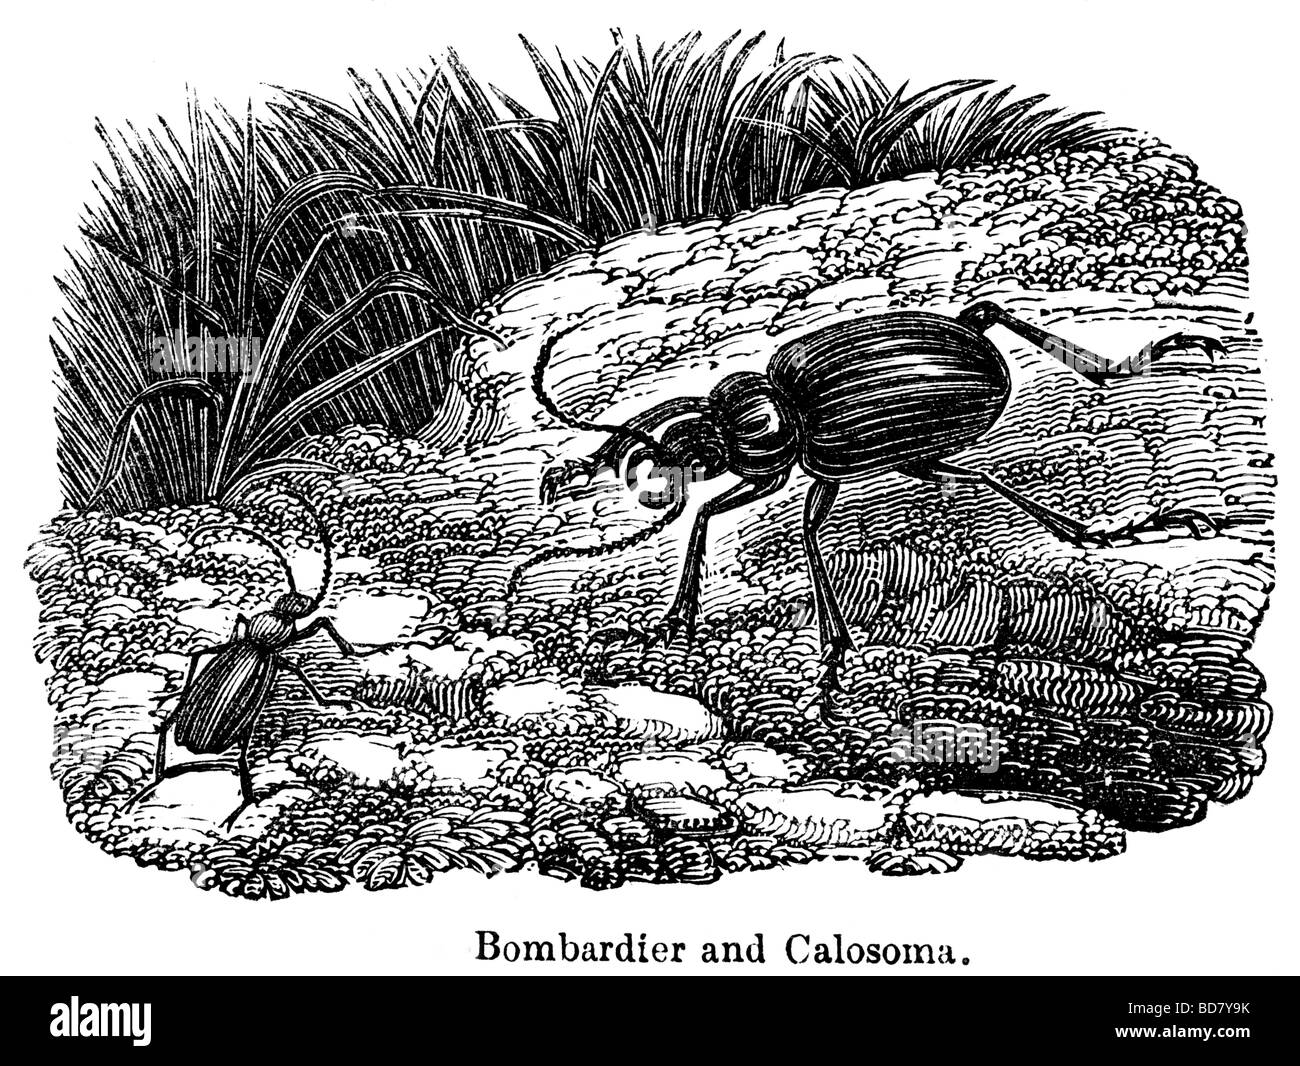 bombardier and calosoma Stock Photo